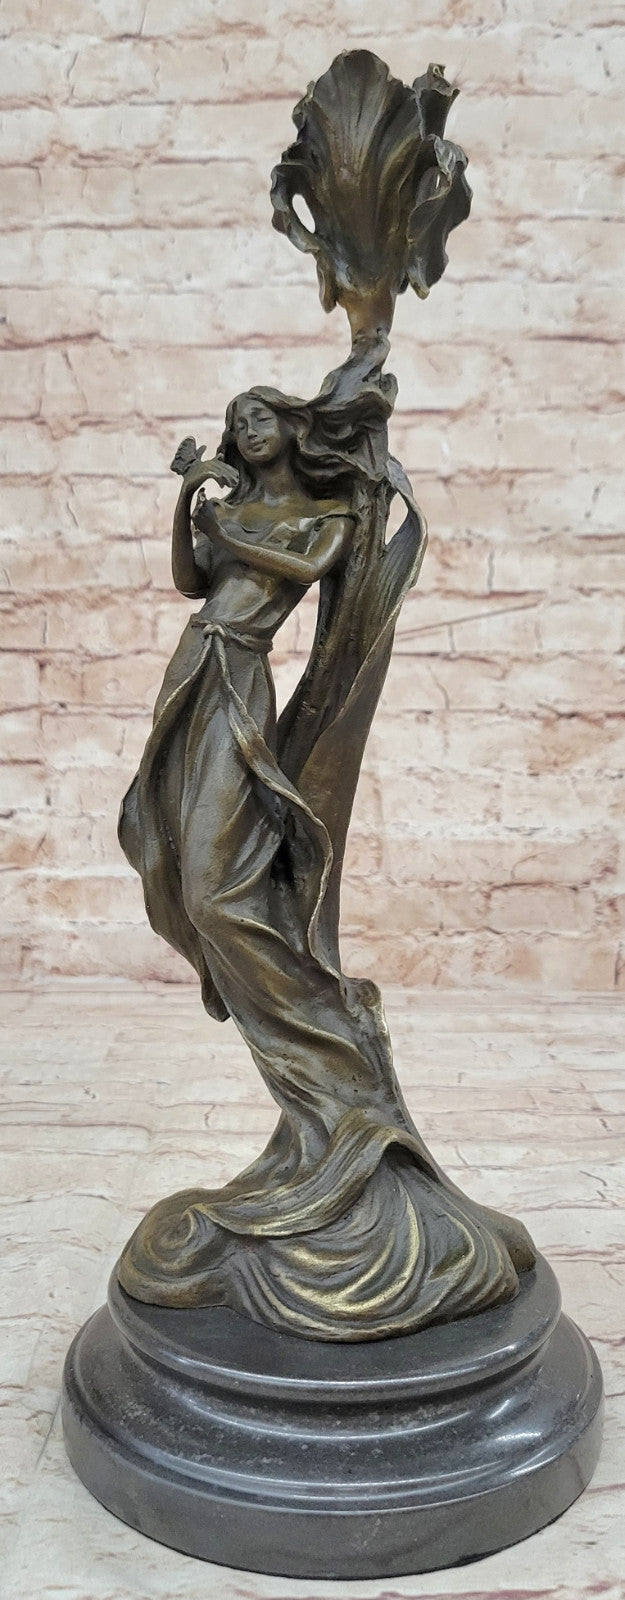 Elegant Wood Nymph Candleholder - Bronze Sculpture for Dining Room Gift